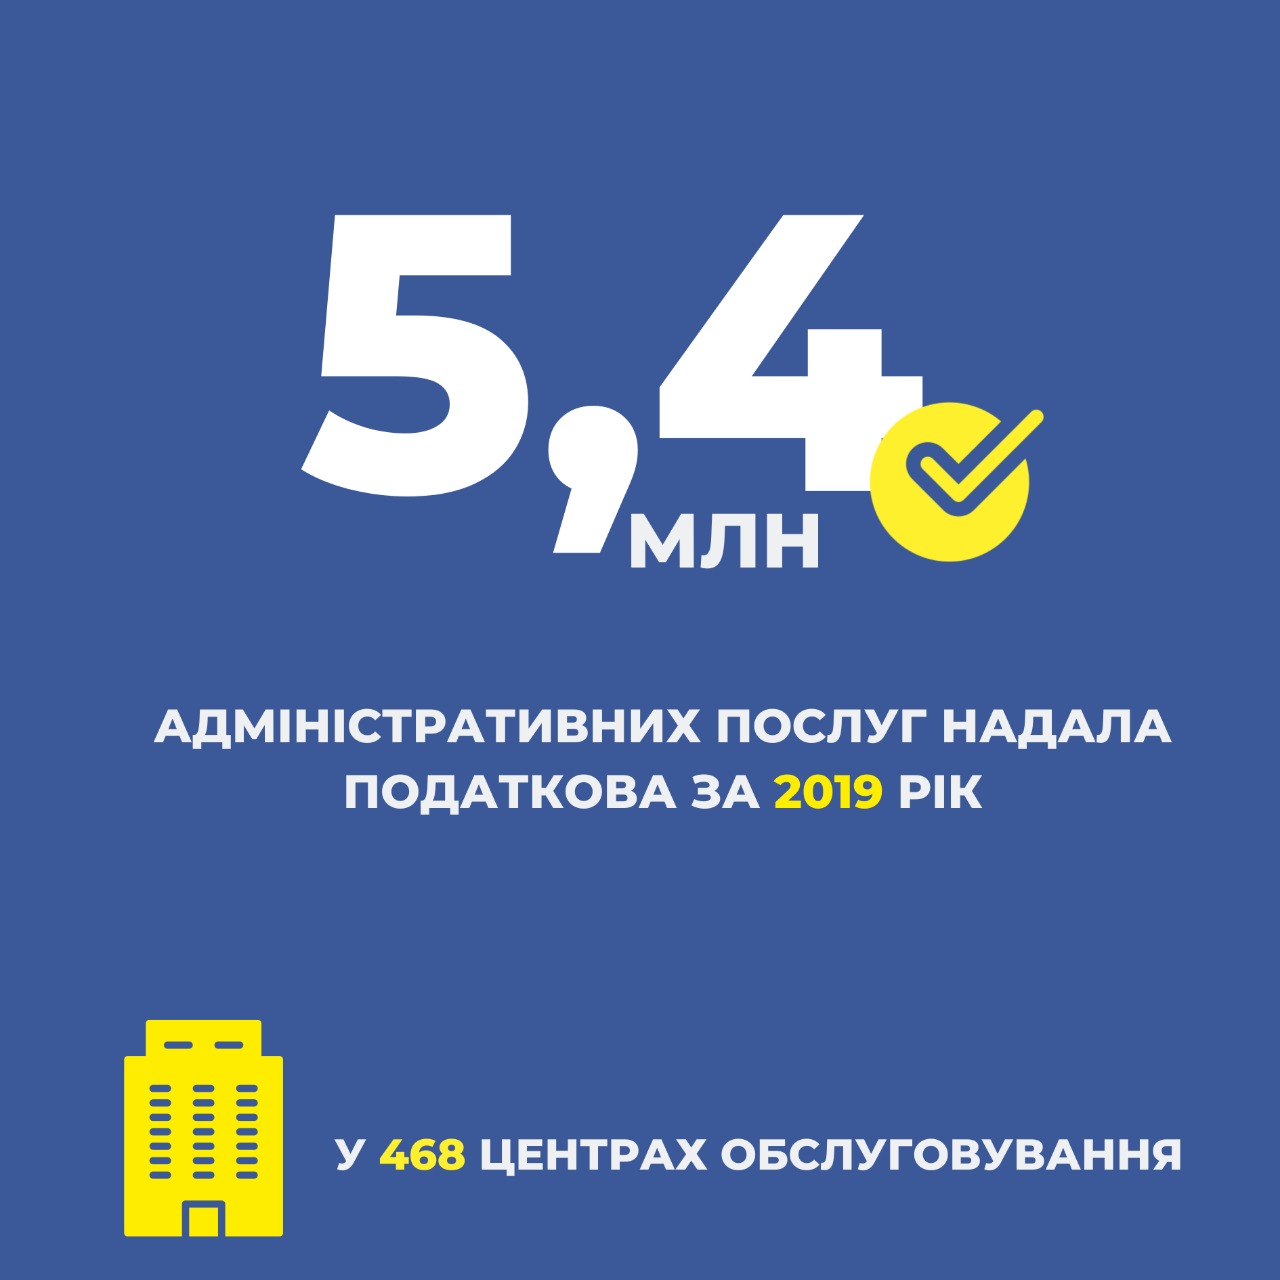 http://tax.gov.ua/data/files/250495.jpg